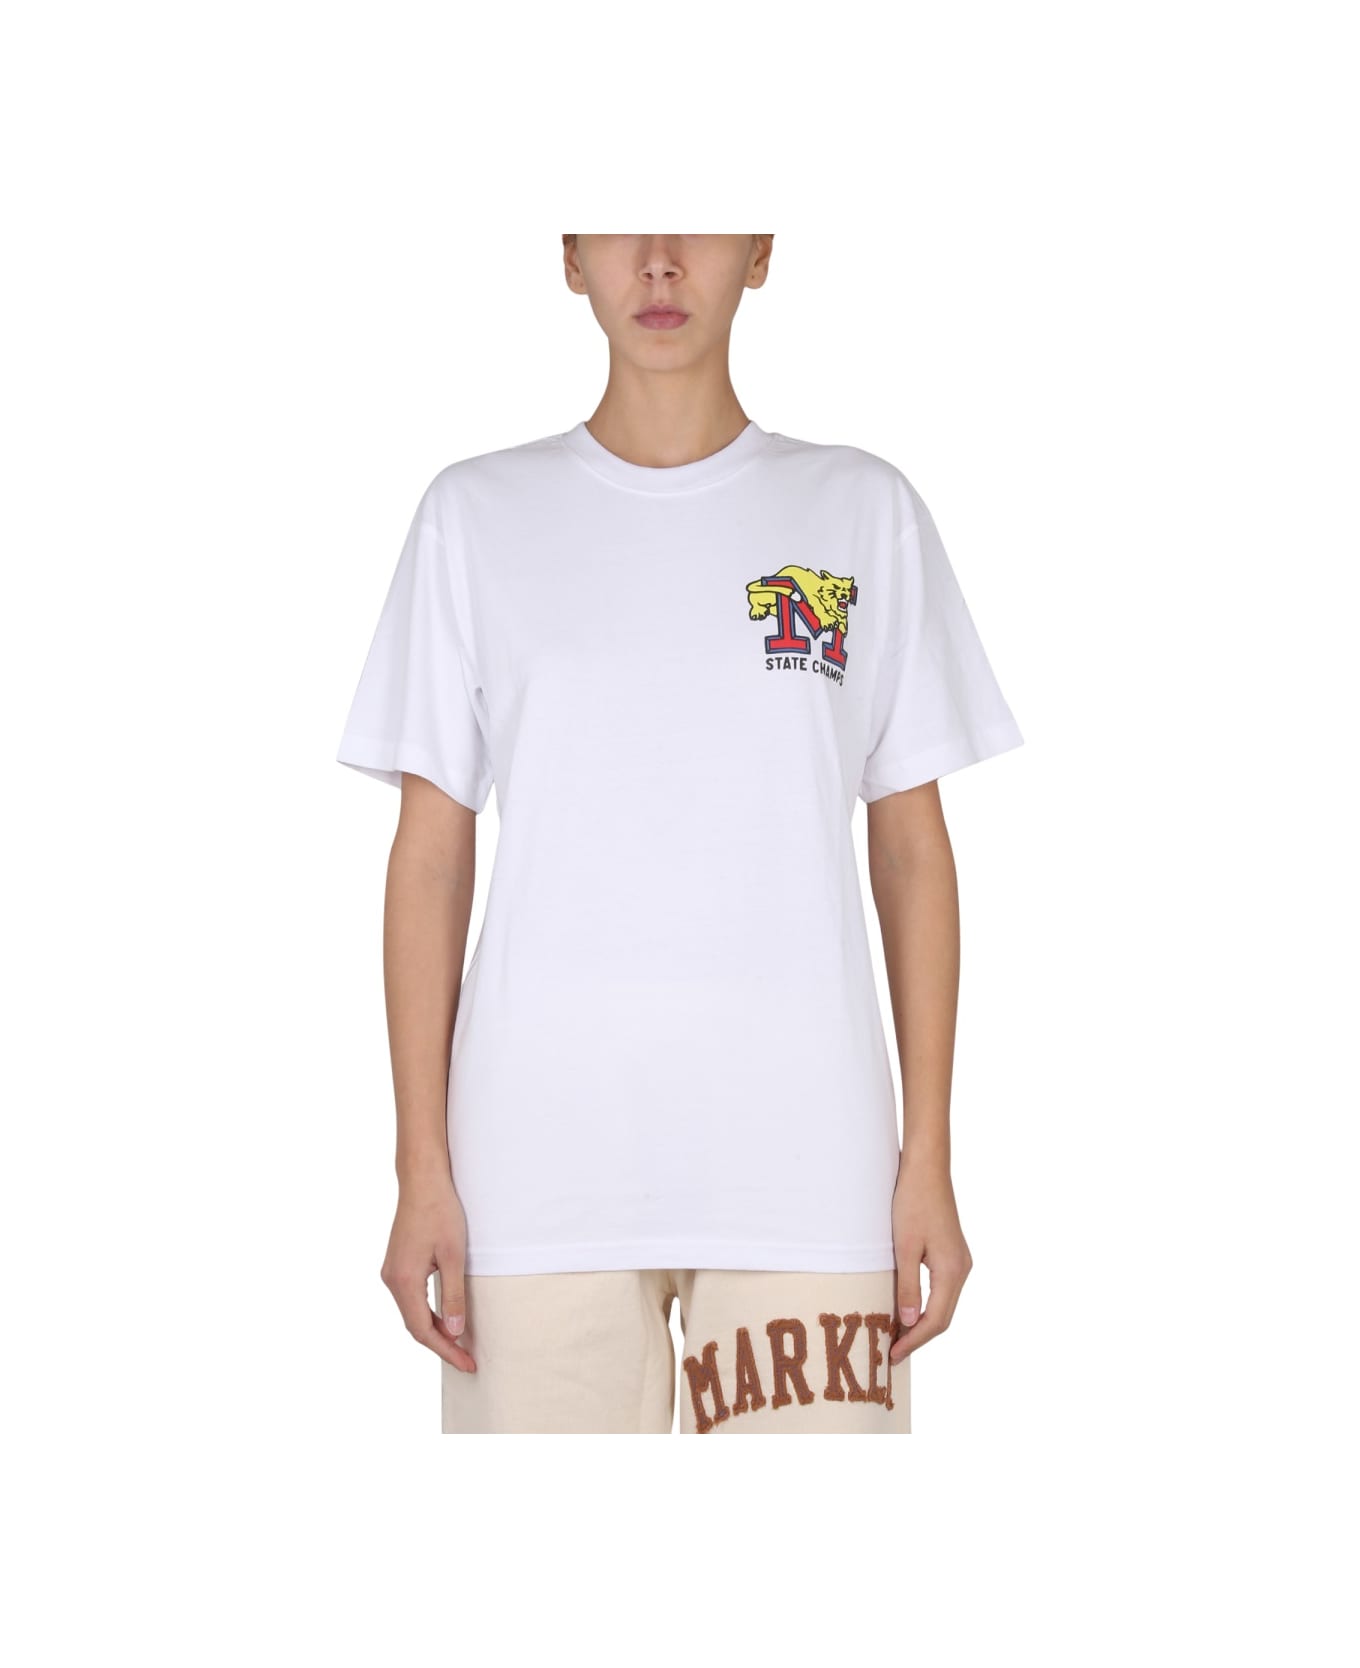 Market T-shirt State Champs - WHITE